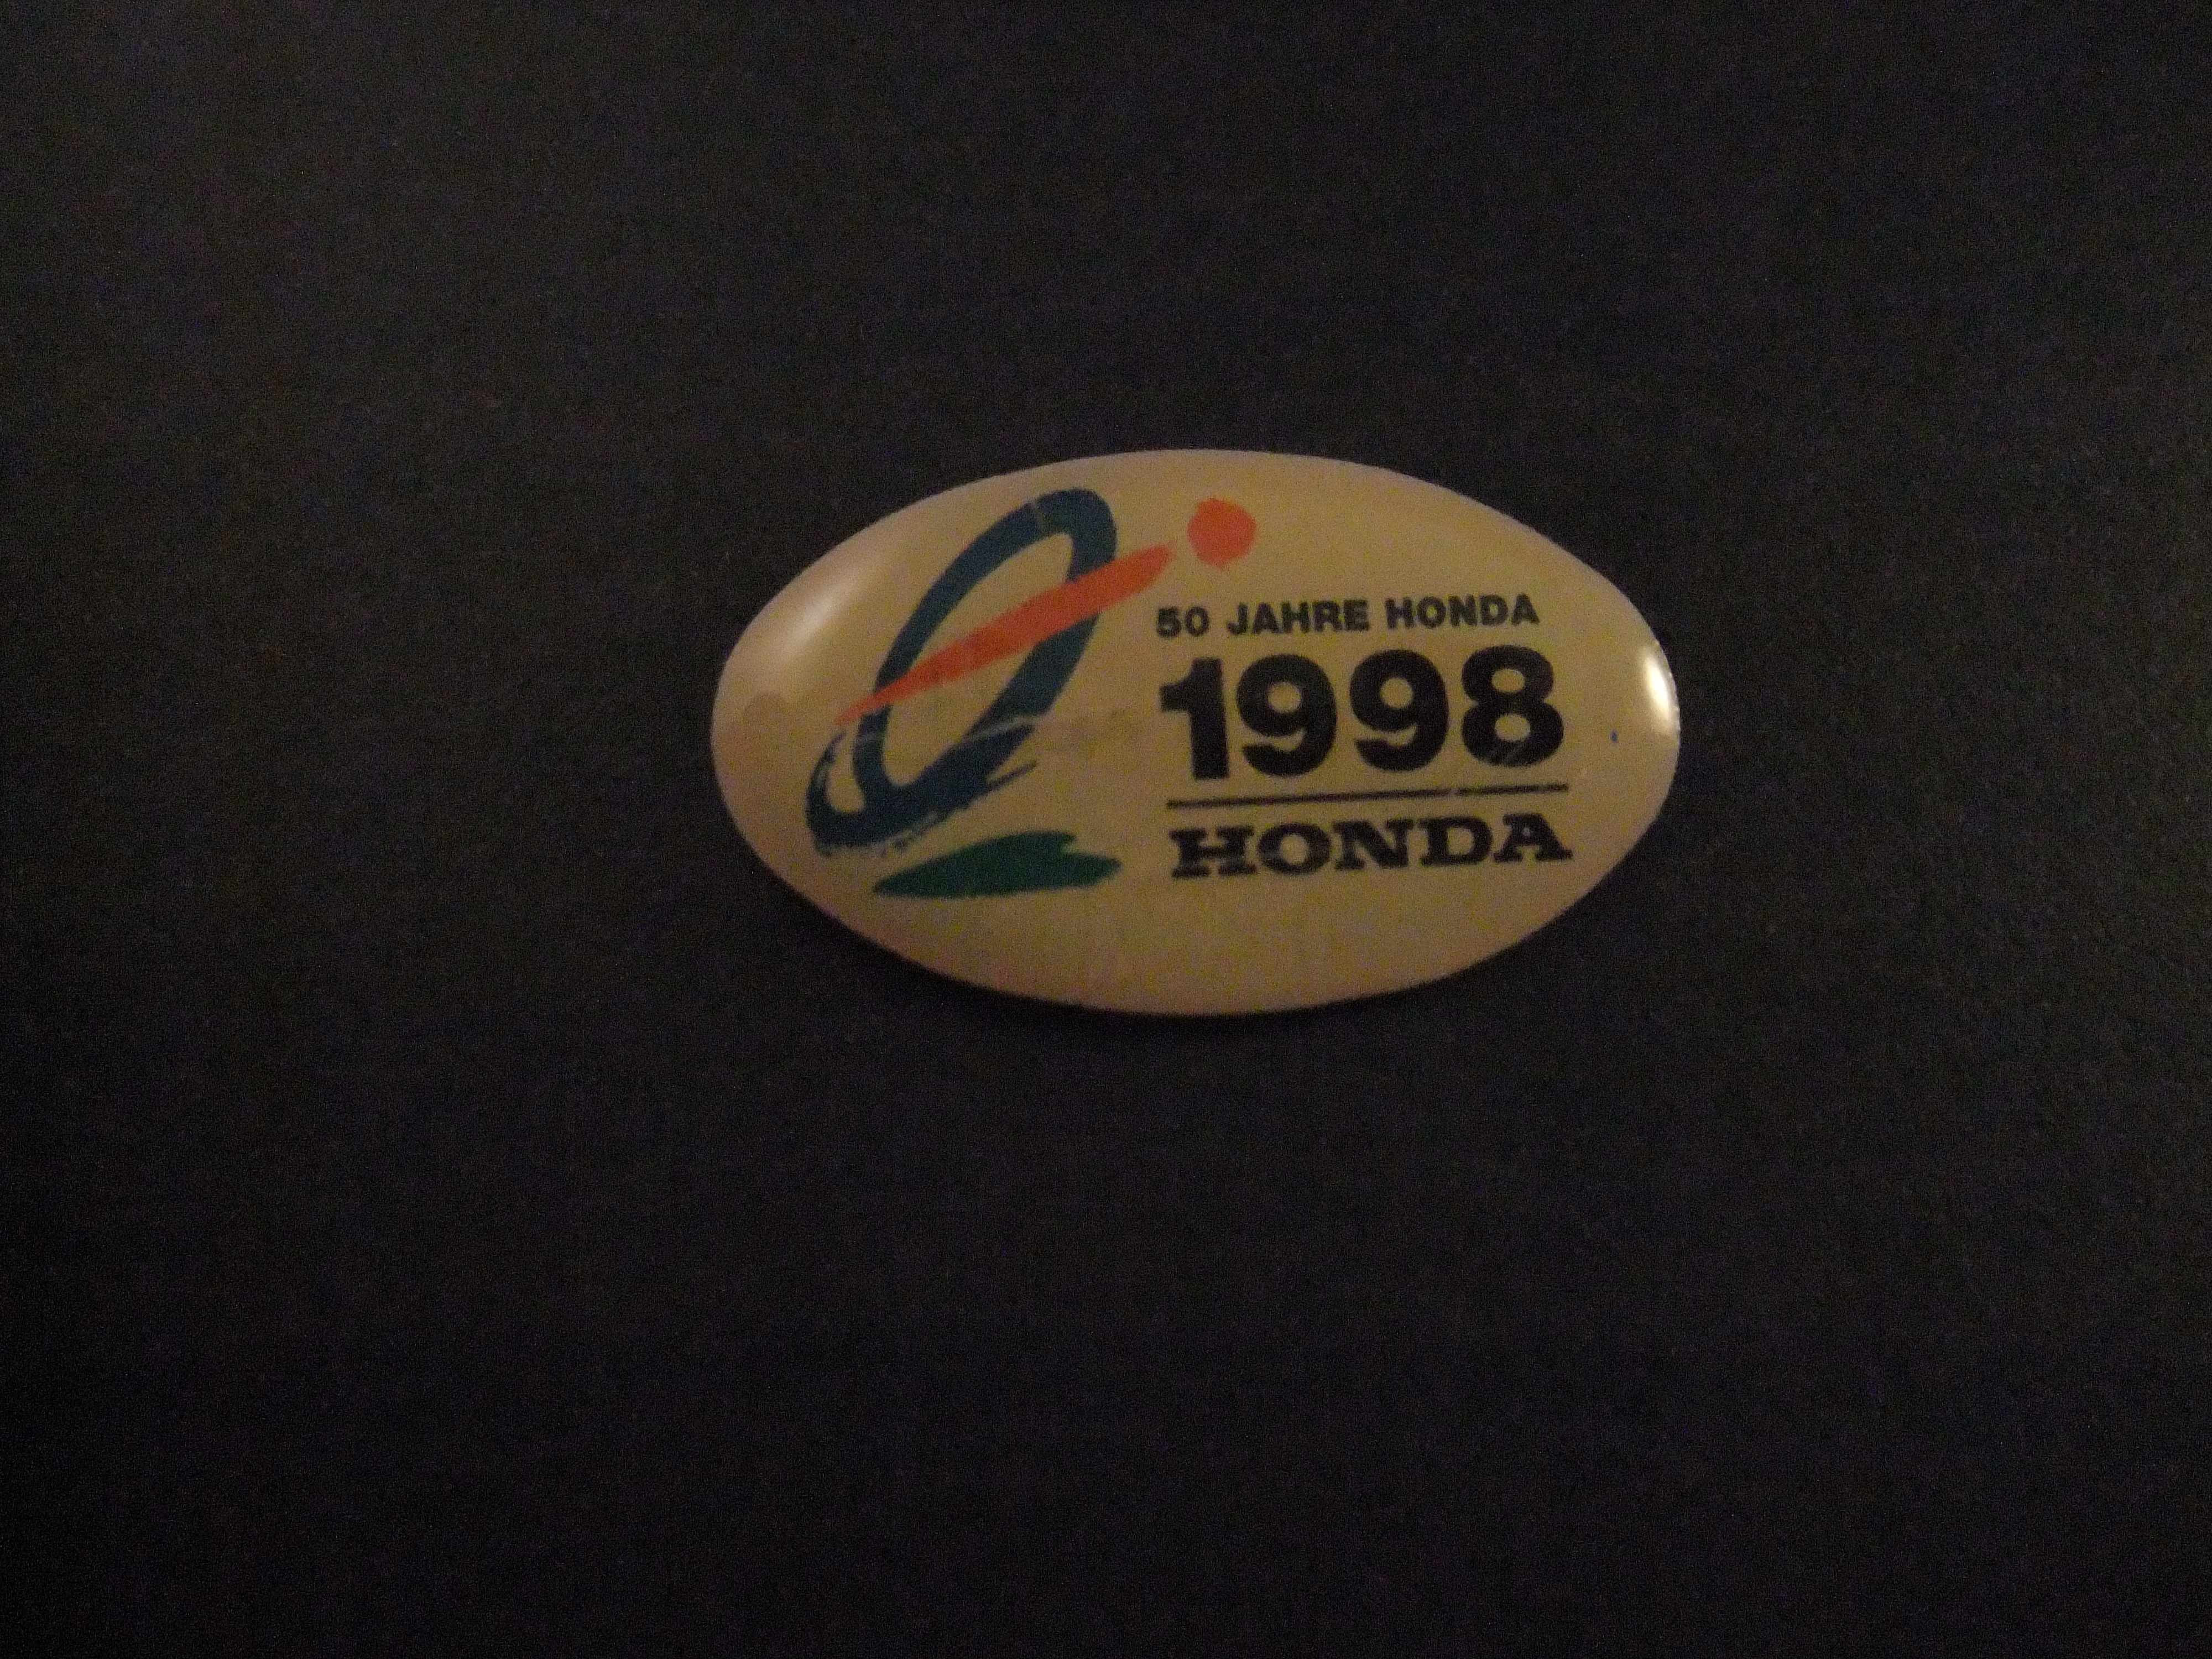 Honda vijftig jarig jubileum 1998